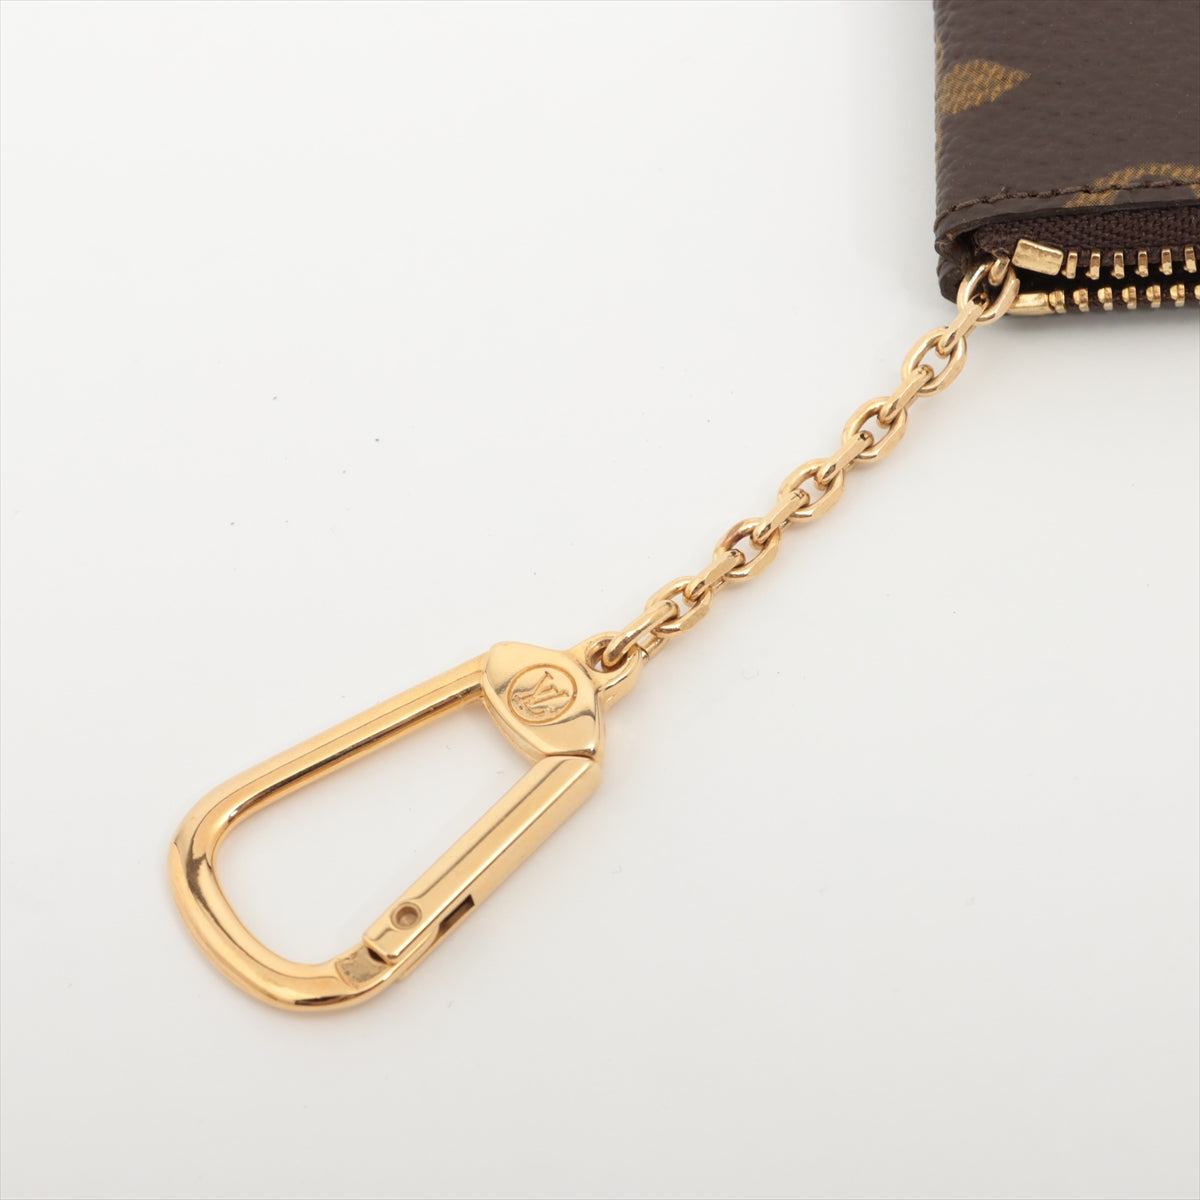 Louis Vuitton Key Pouch Monogram - THE PURSE AFFAIR